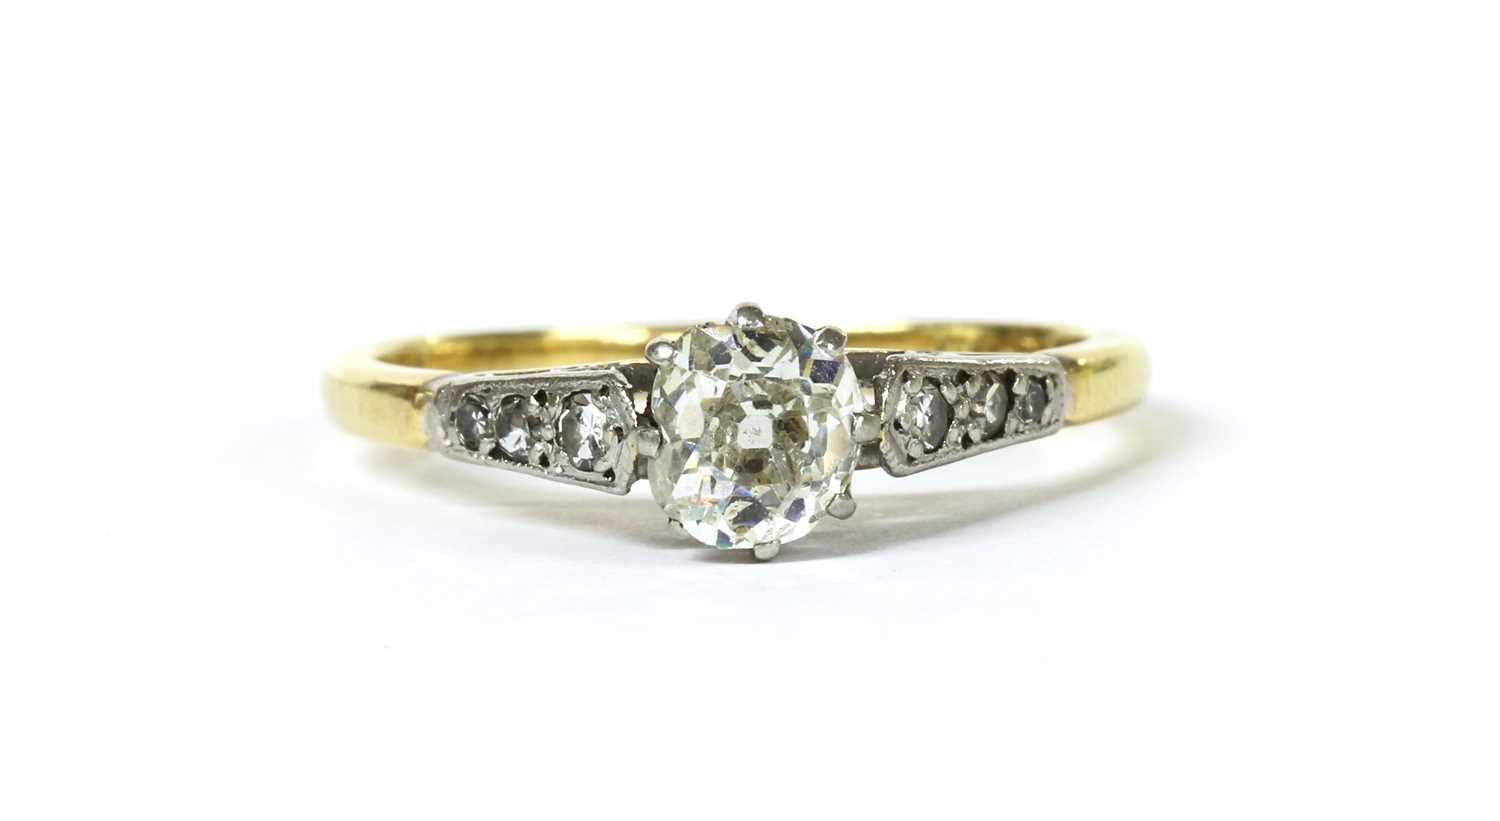 Lot 1168 - A gold single stone diamond ring